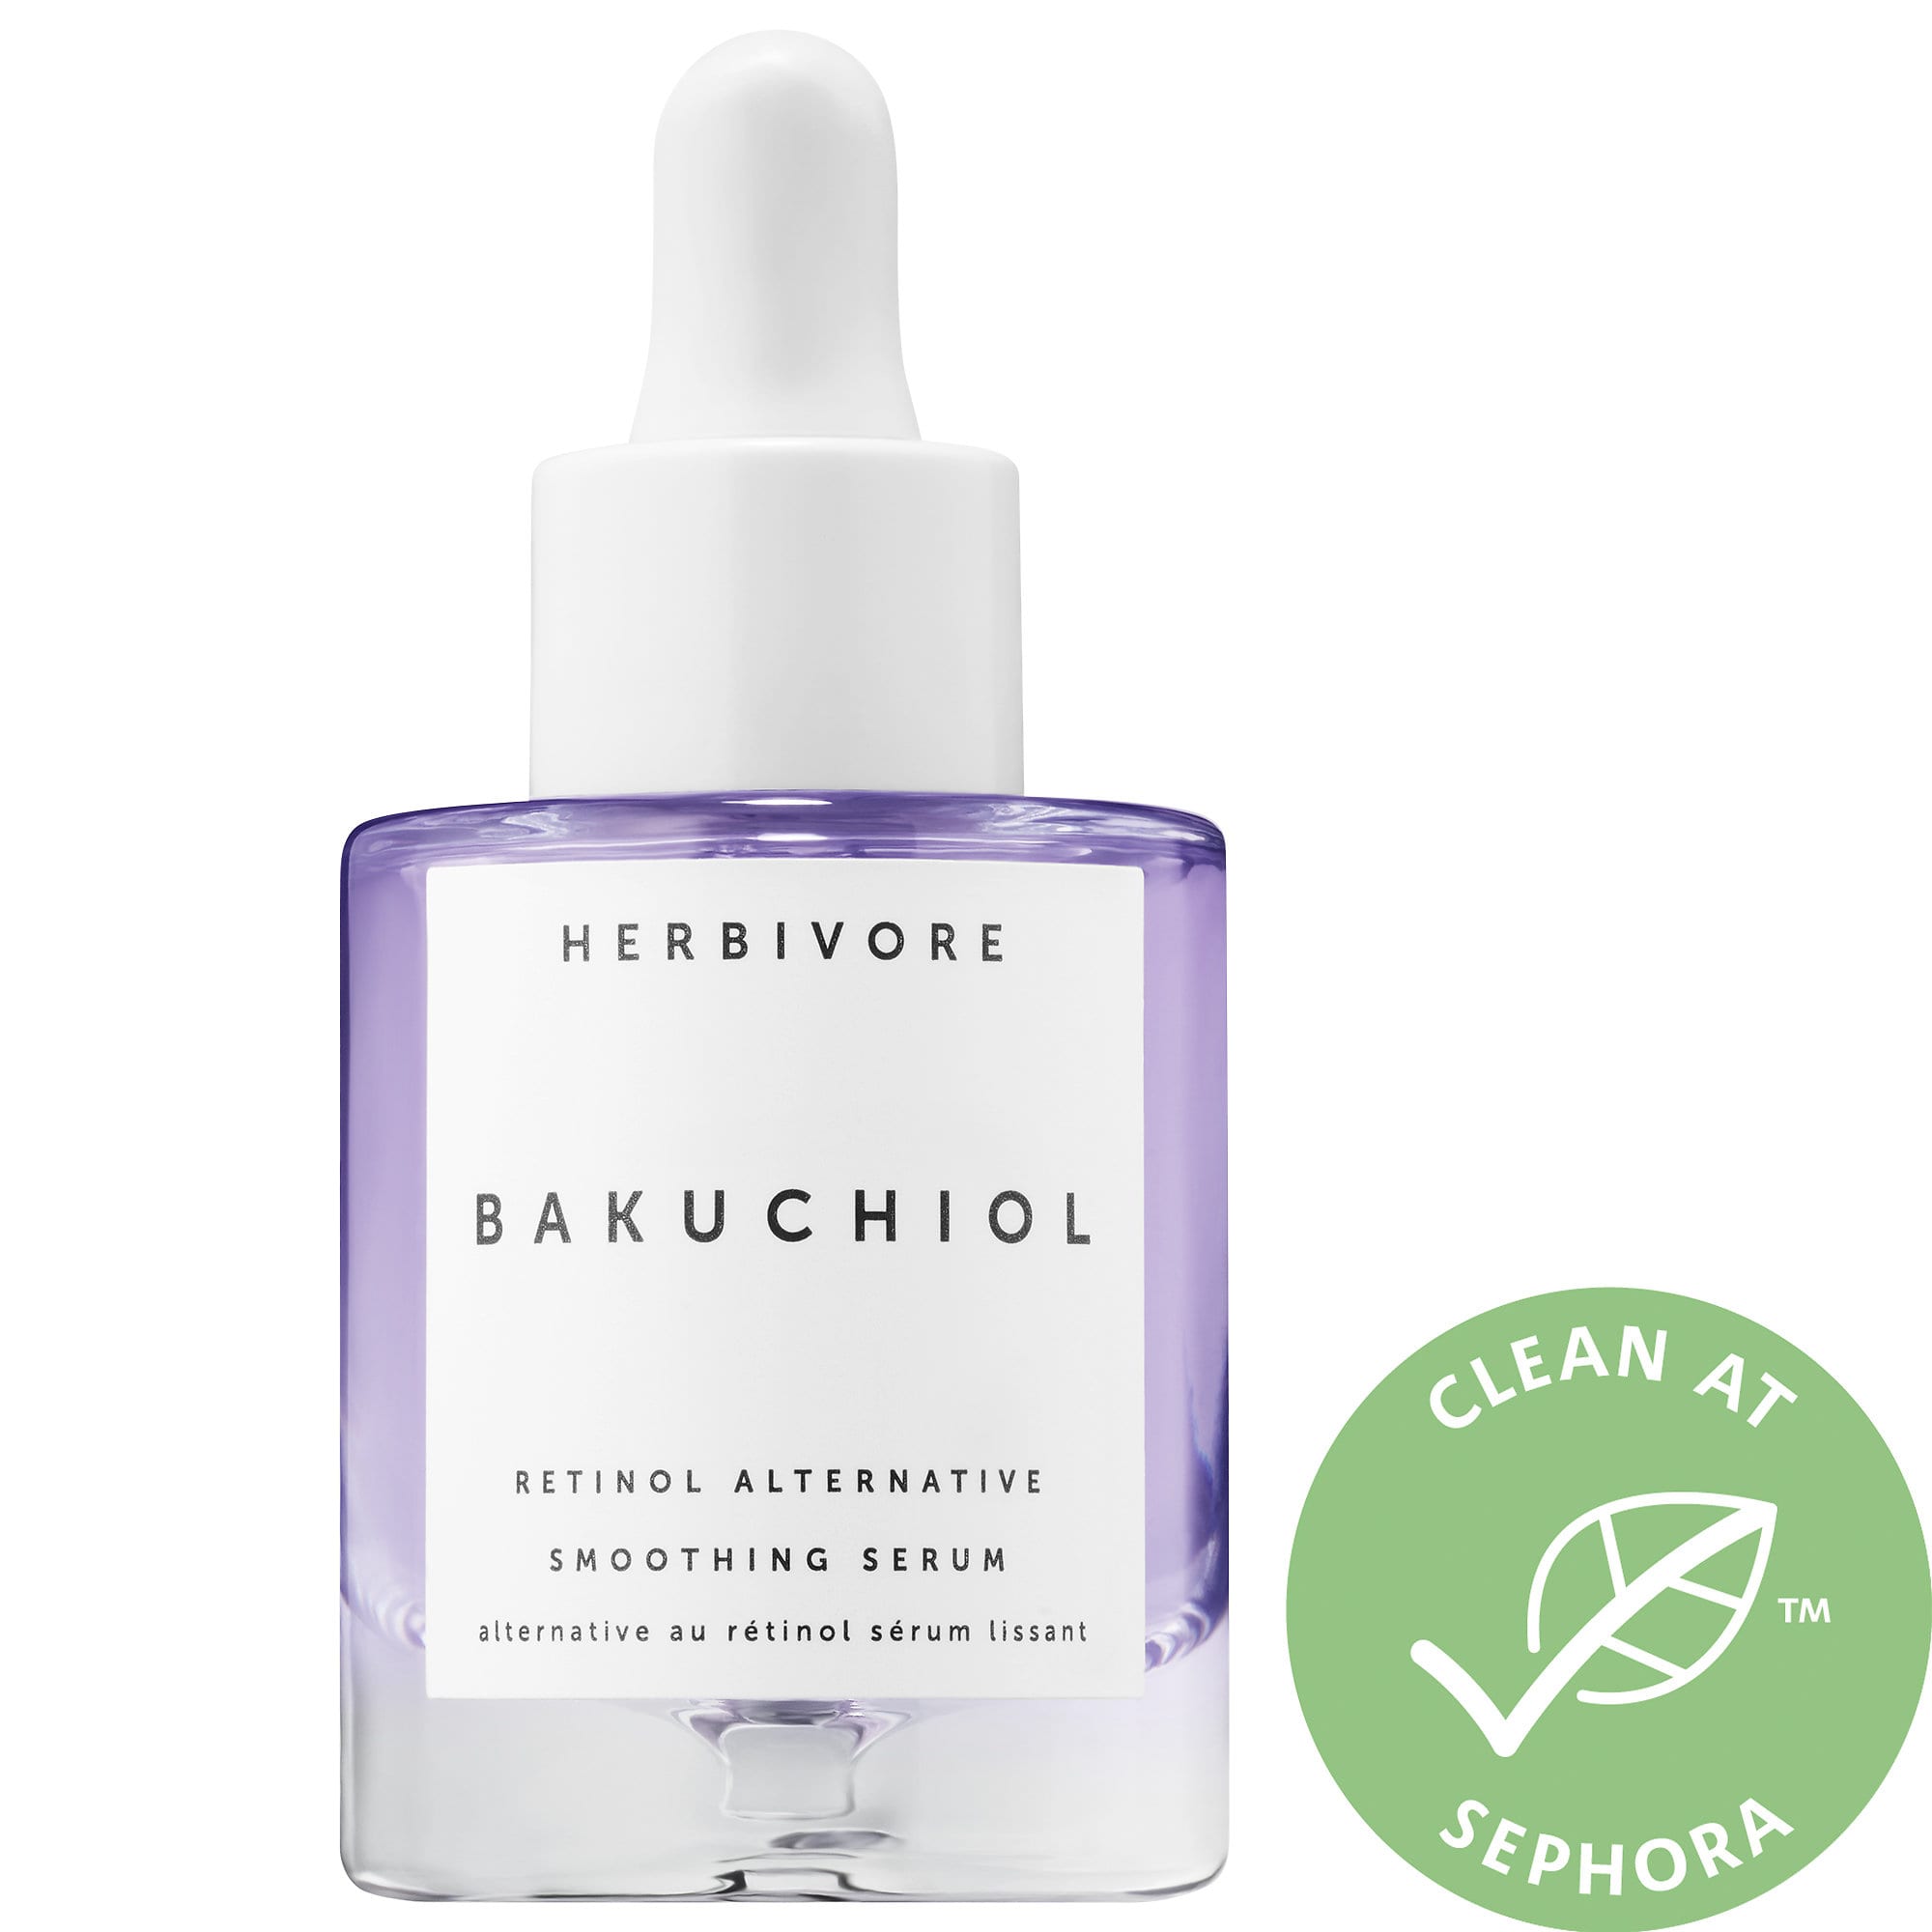 Bakuchiol Retinol Alternative Smoothing Serum Mini